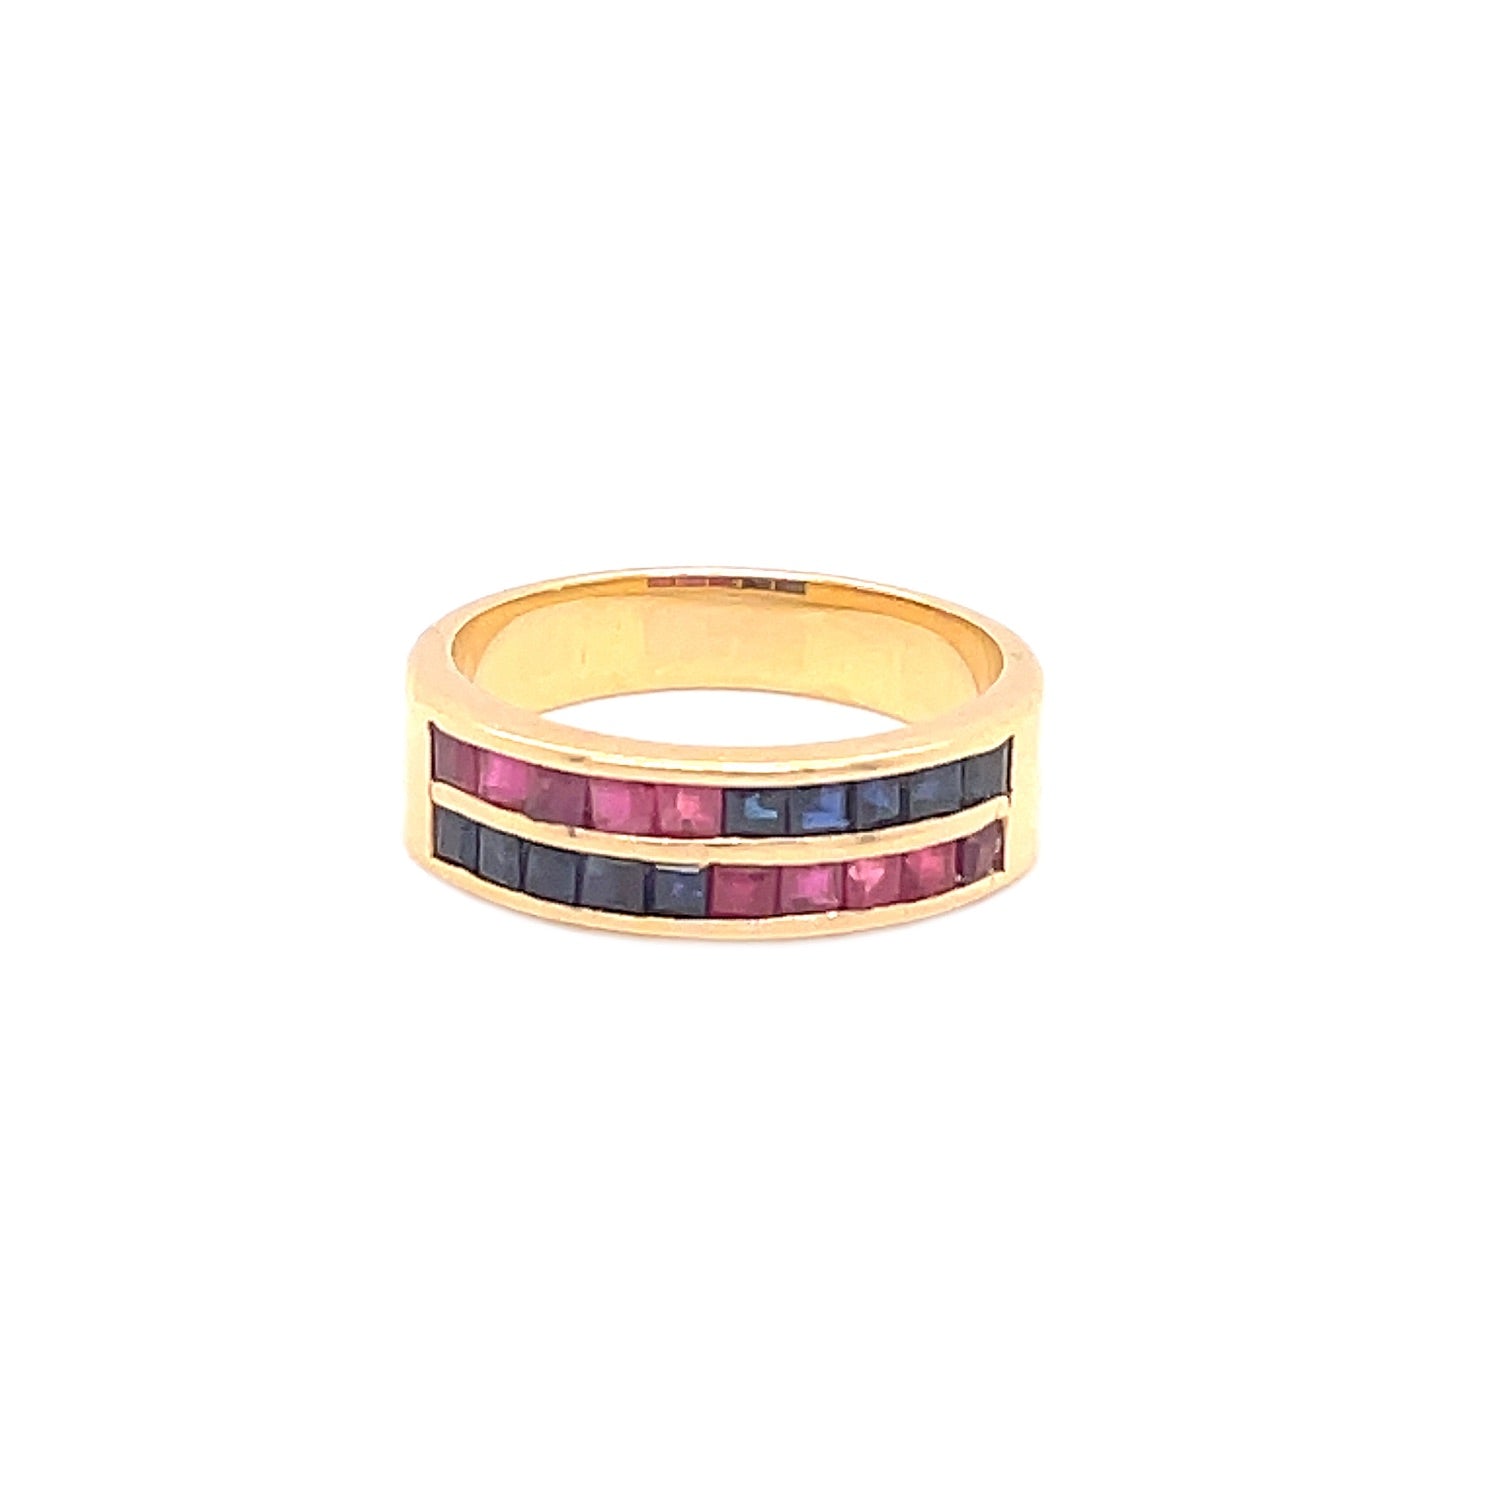 Striking channel-set golden ring with alternating pink and blue gemstones.